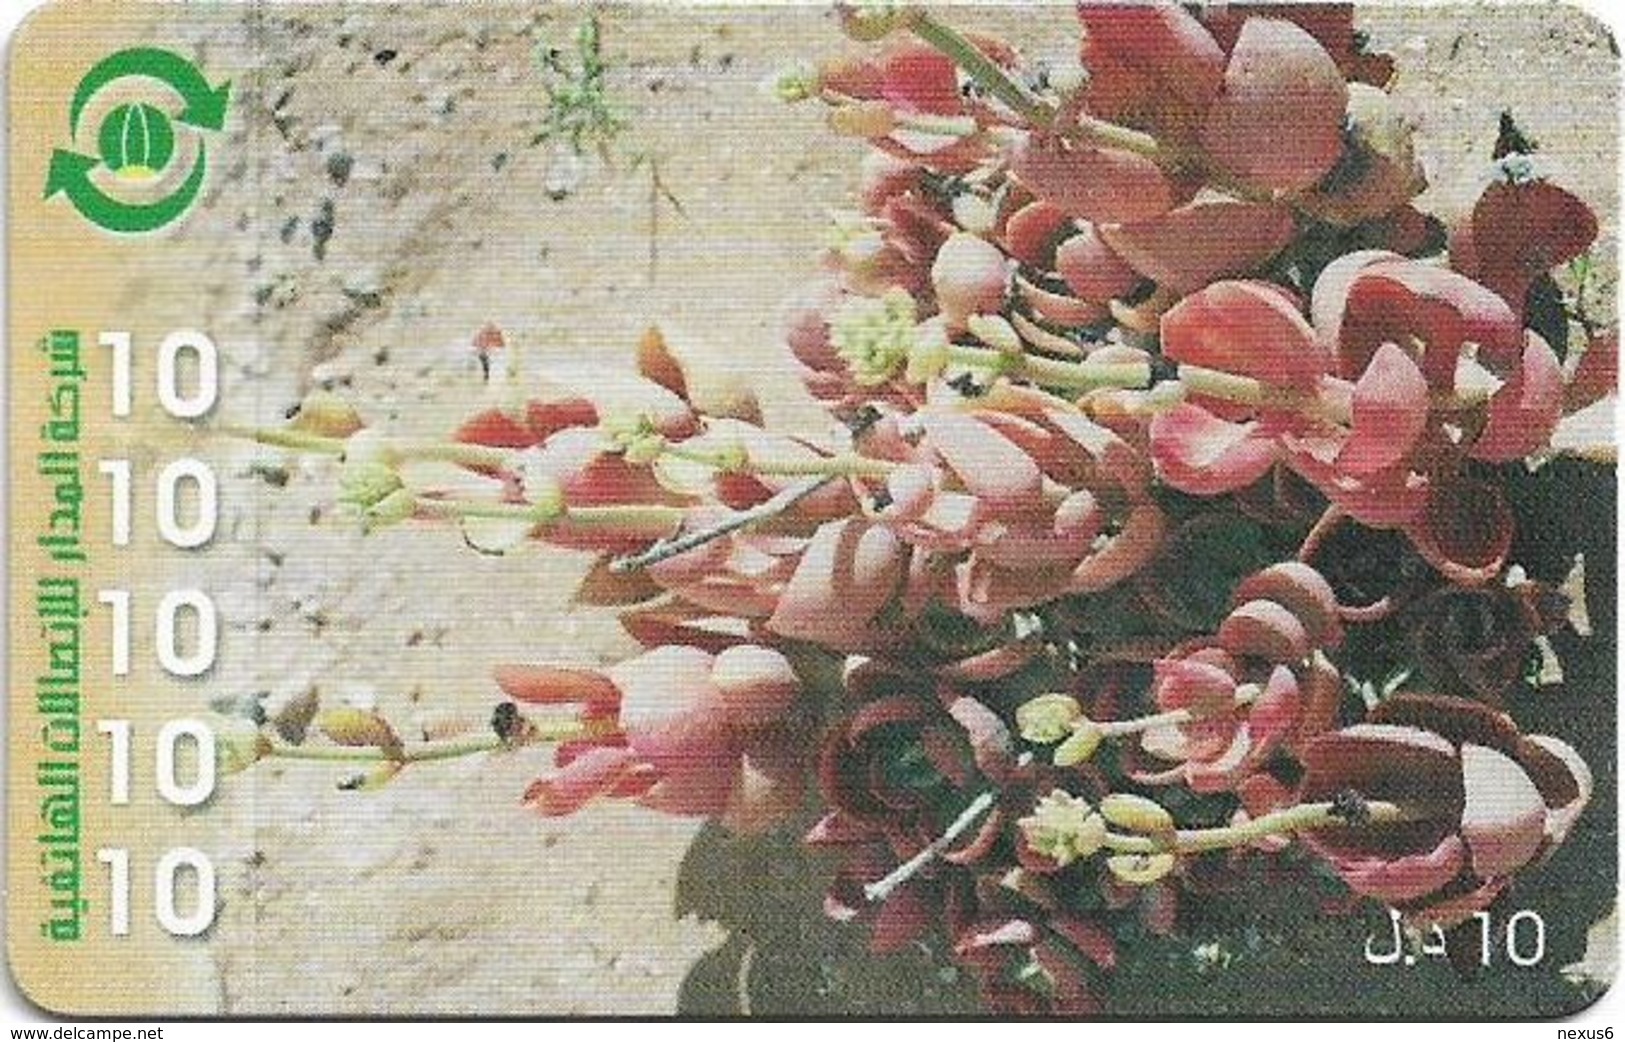 Libya - Almadar - Flowers, 10LD Prepaid Card, Used - Libya